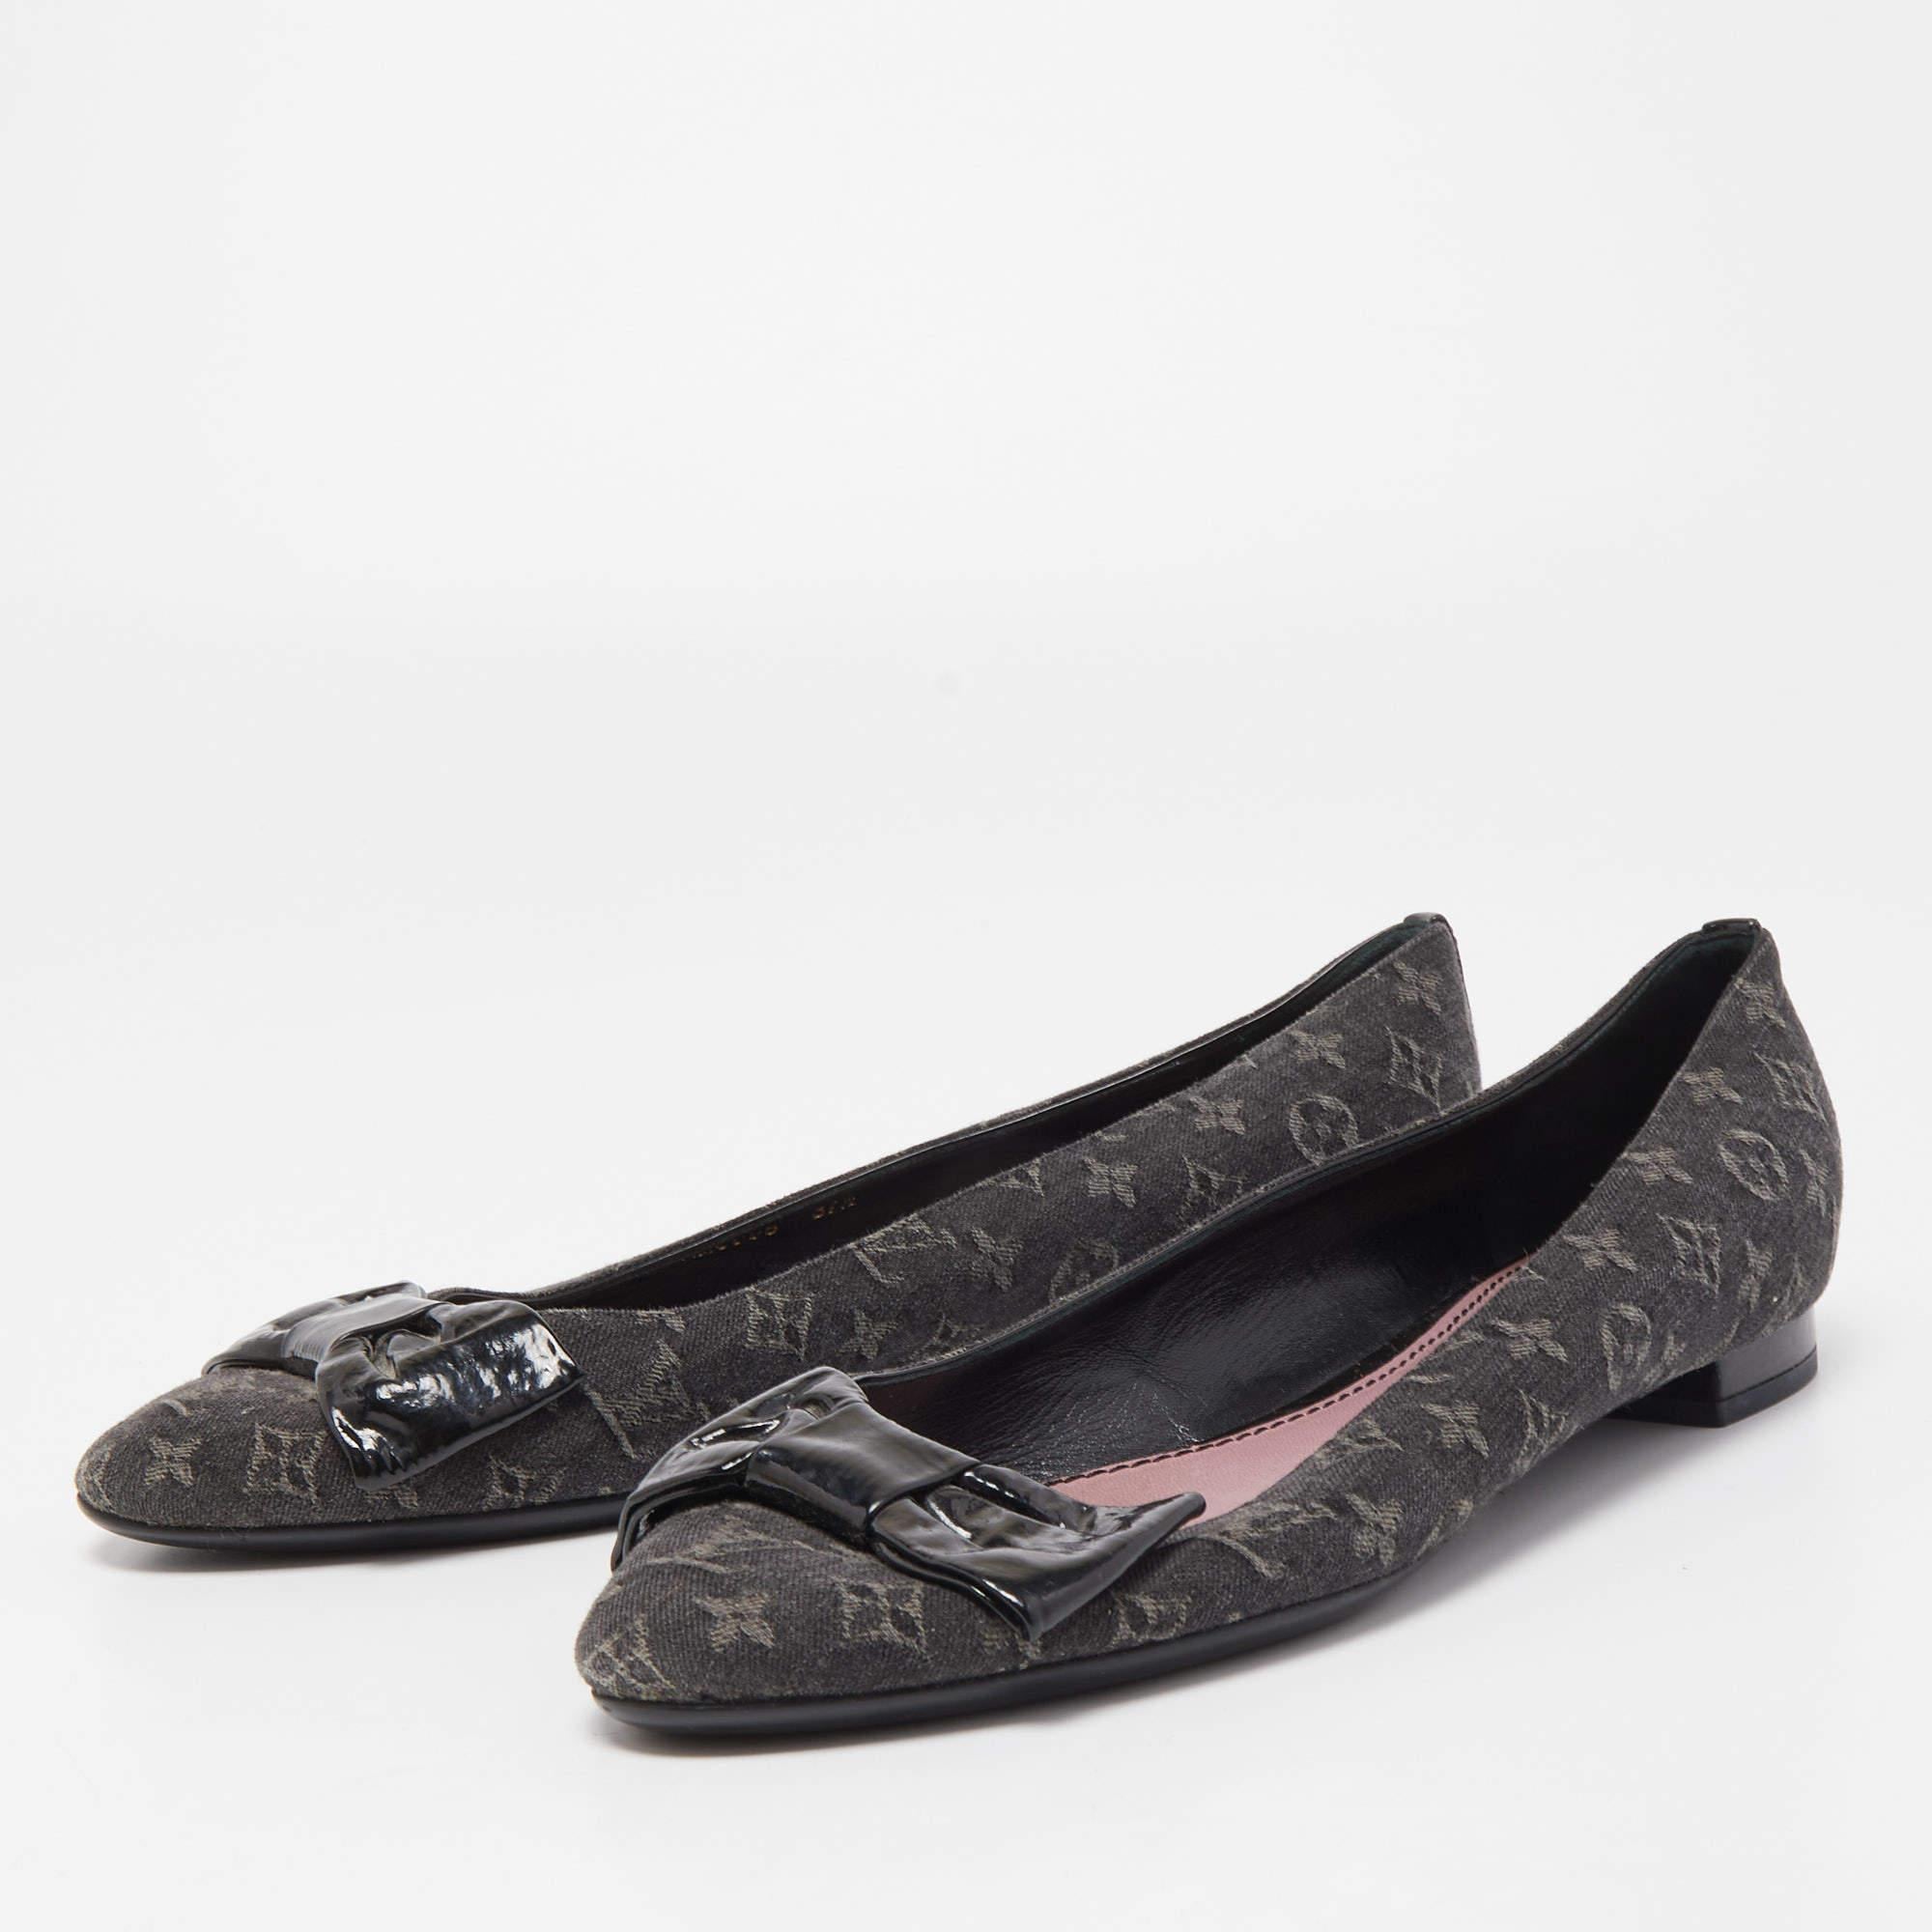 Women's Louis Vuitton Black Monogram Canvas and Patent Leather Bow Ballet Flats Size 37. For Sale